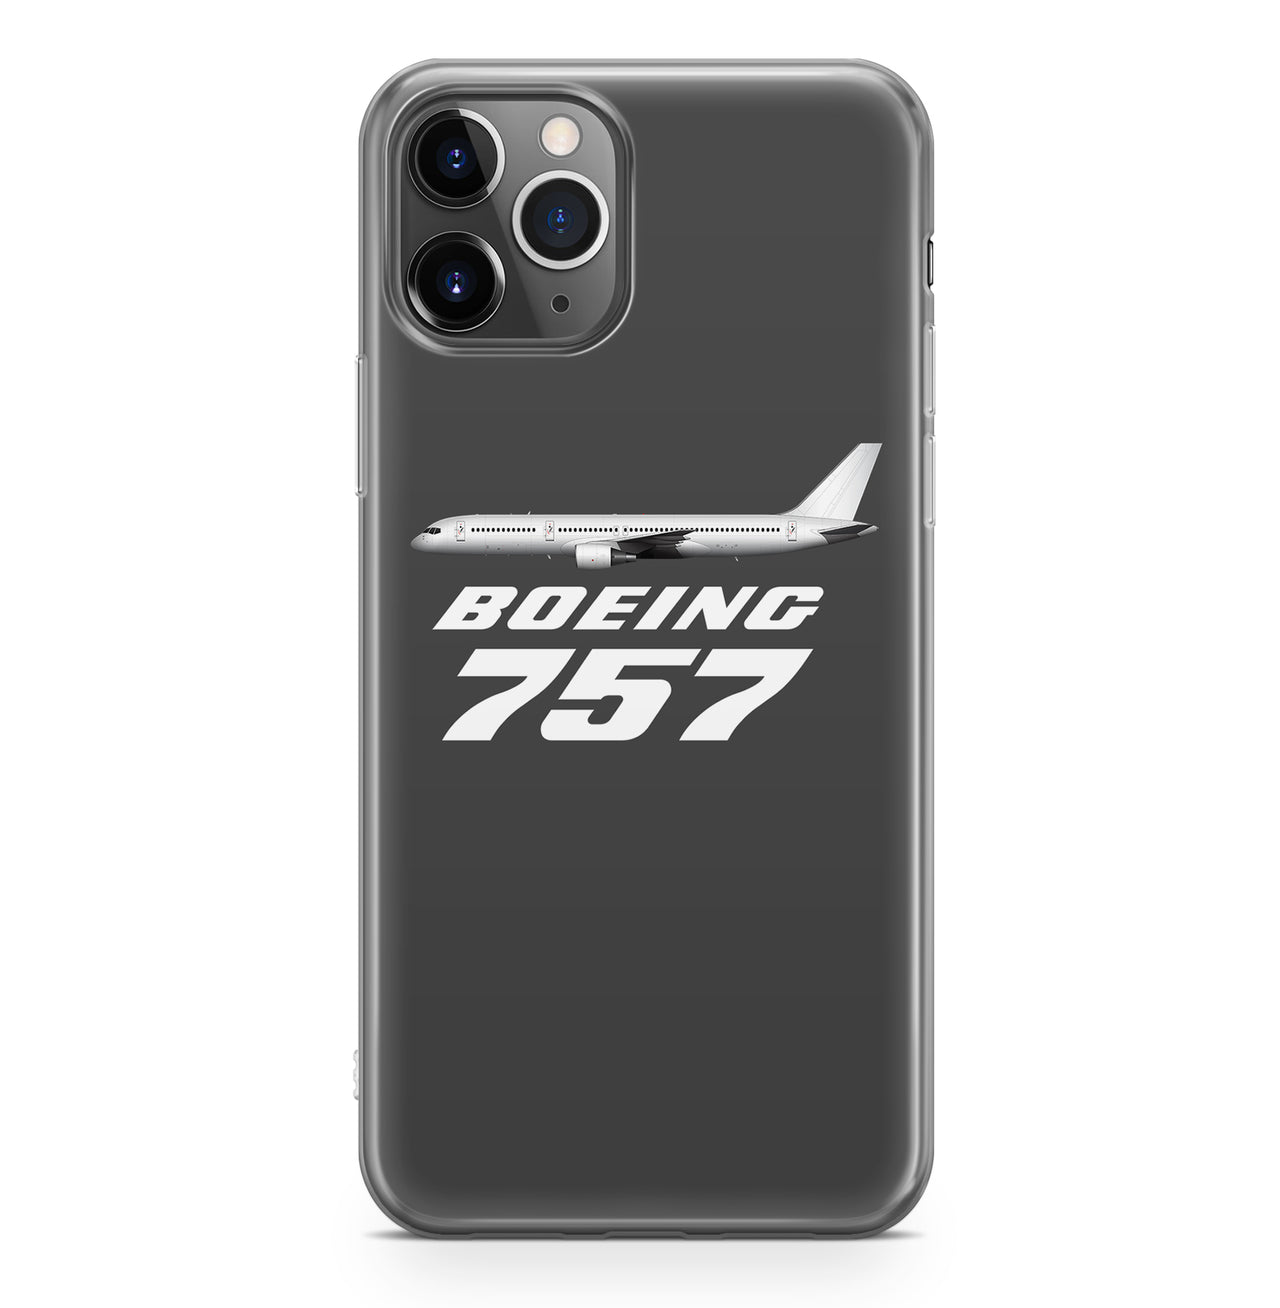 The Boeing 757 Designed iPhone Cases